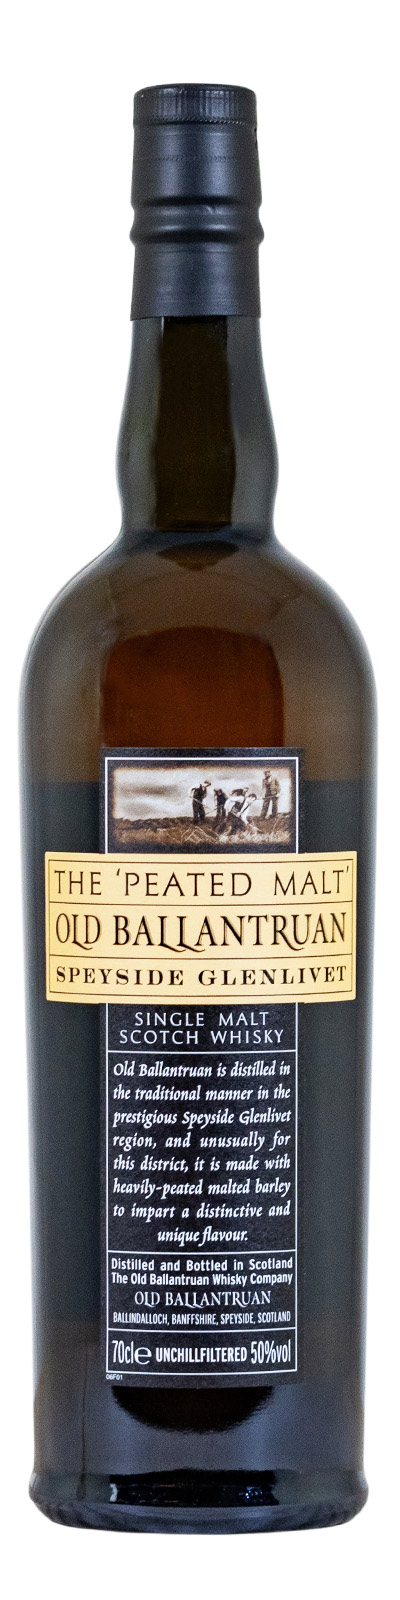 Old Ballantruan The Peated Unchillfiltered Single Malt Scotch Whisky - 0,7L 50% vol